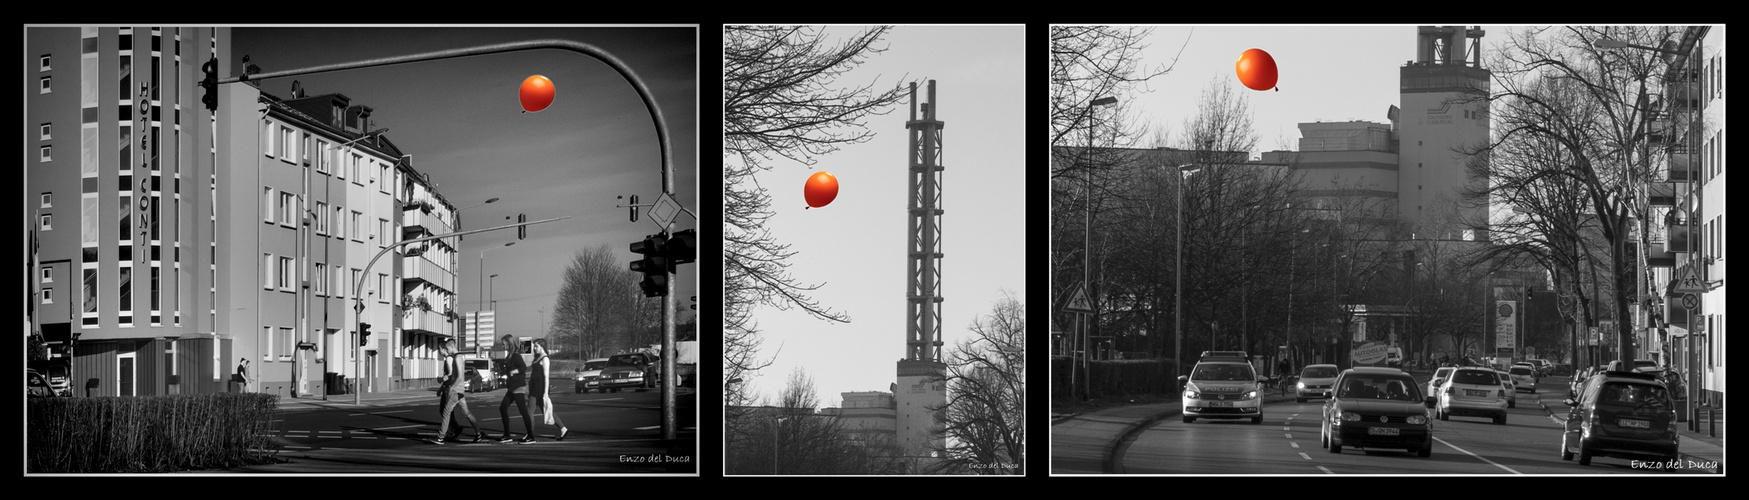 Le ballon orange in Duisburg